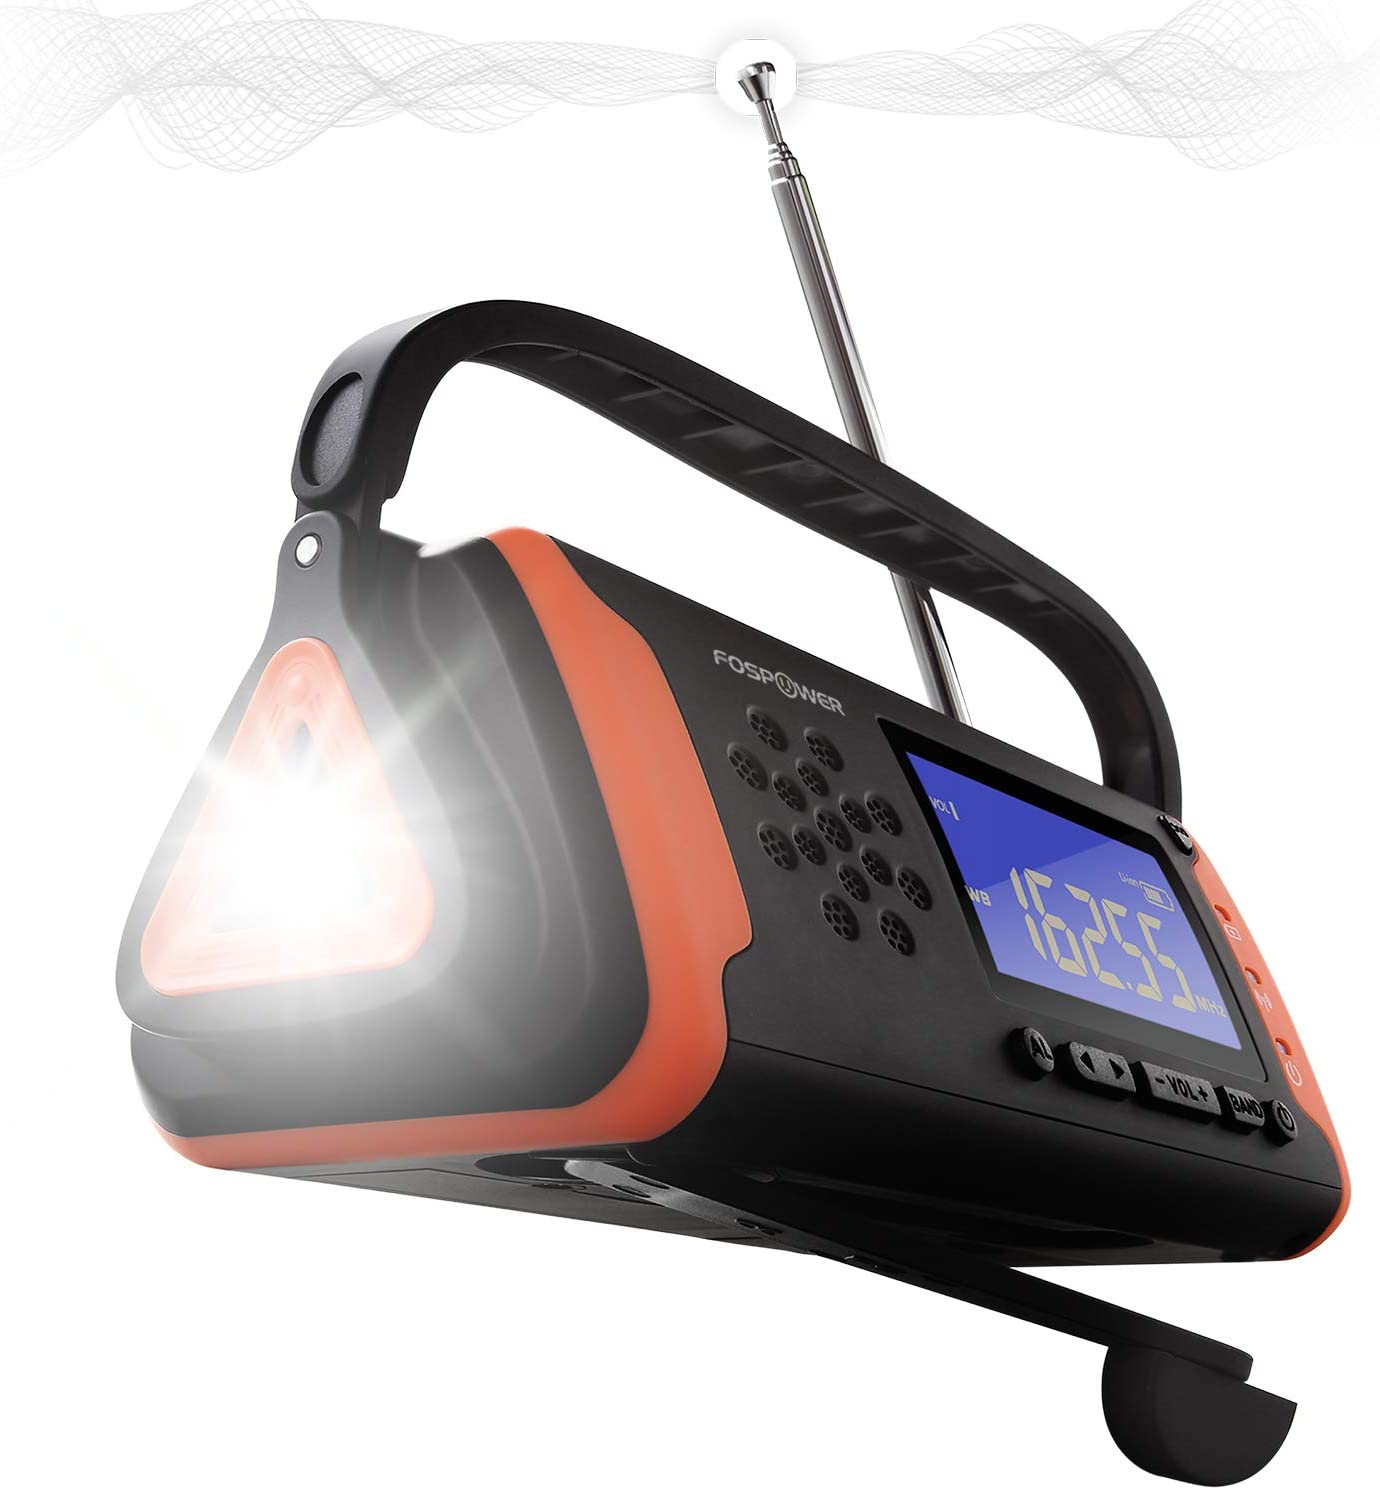 FosPower Emergency Solar Hand Crank Digital Portable AM/FM, NOAA Weather Radio review